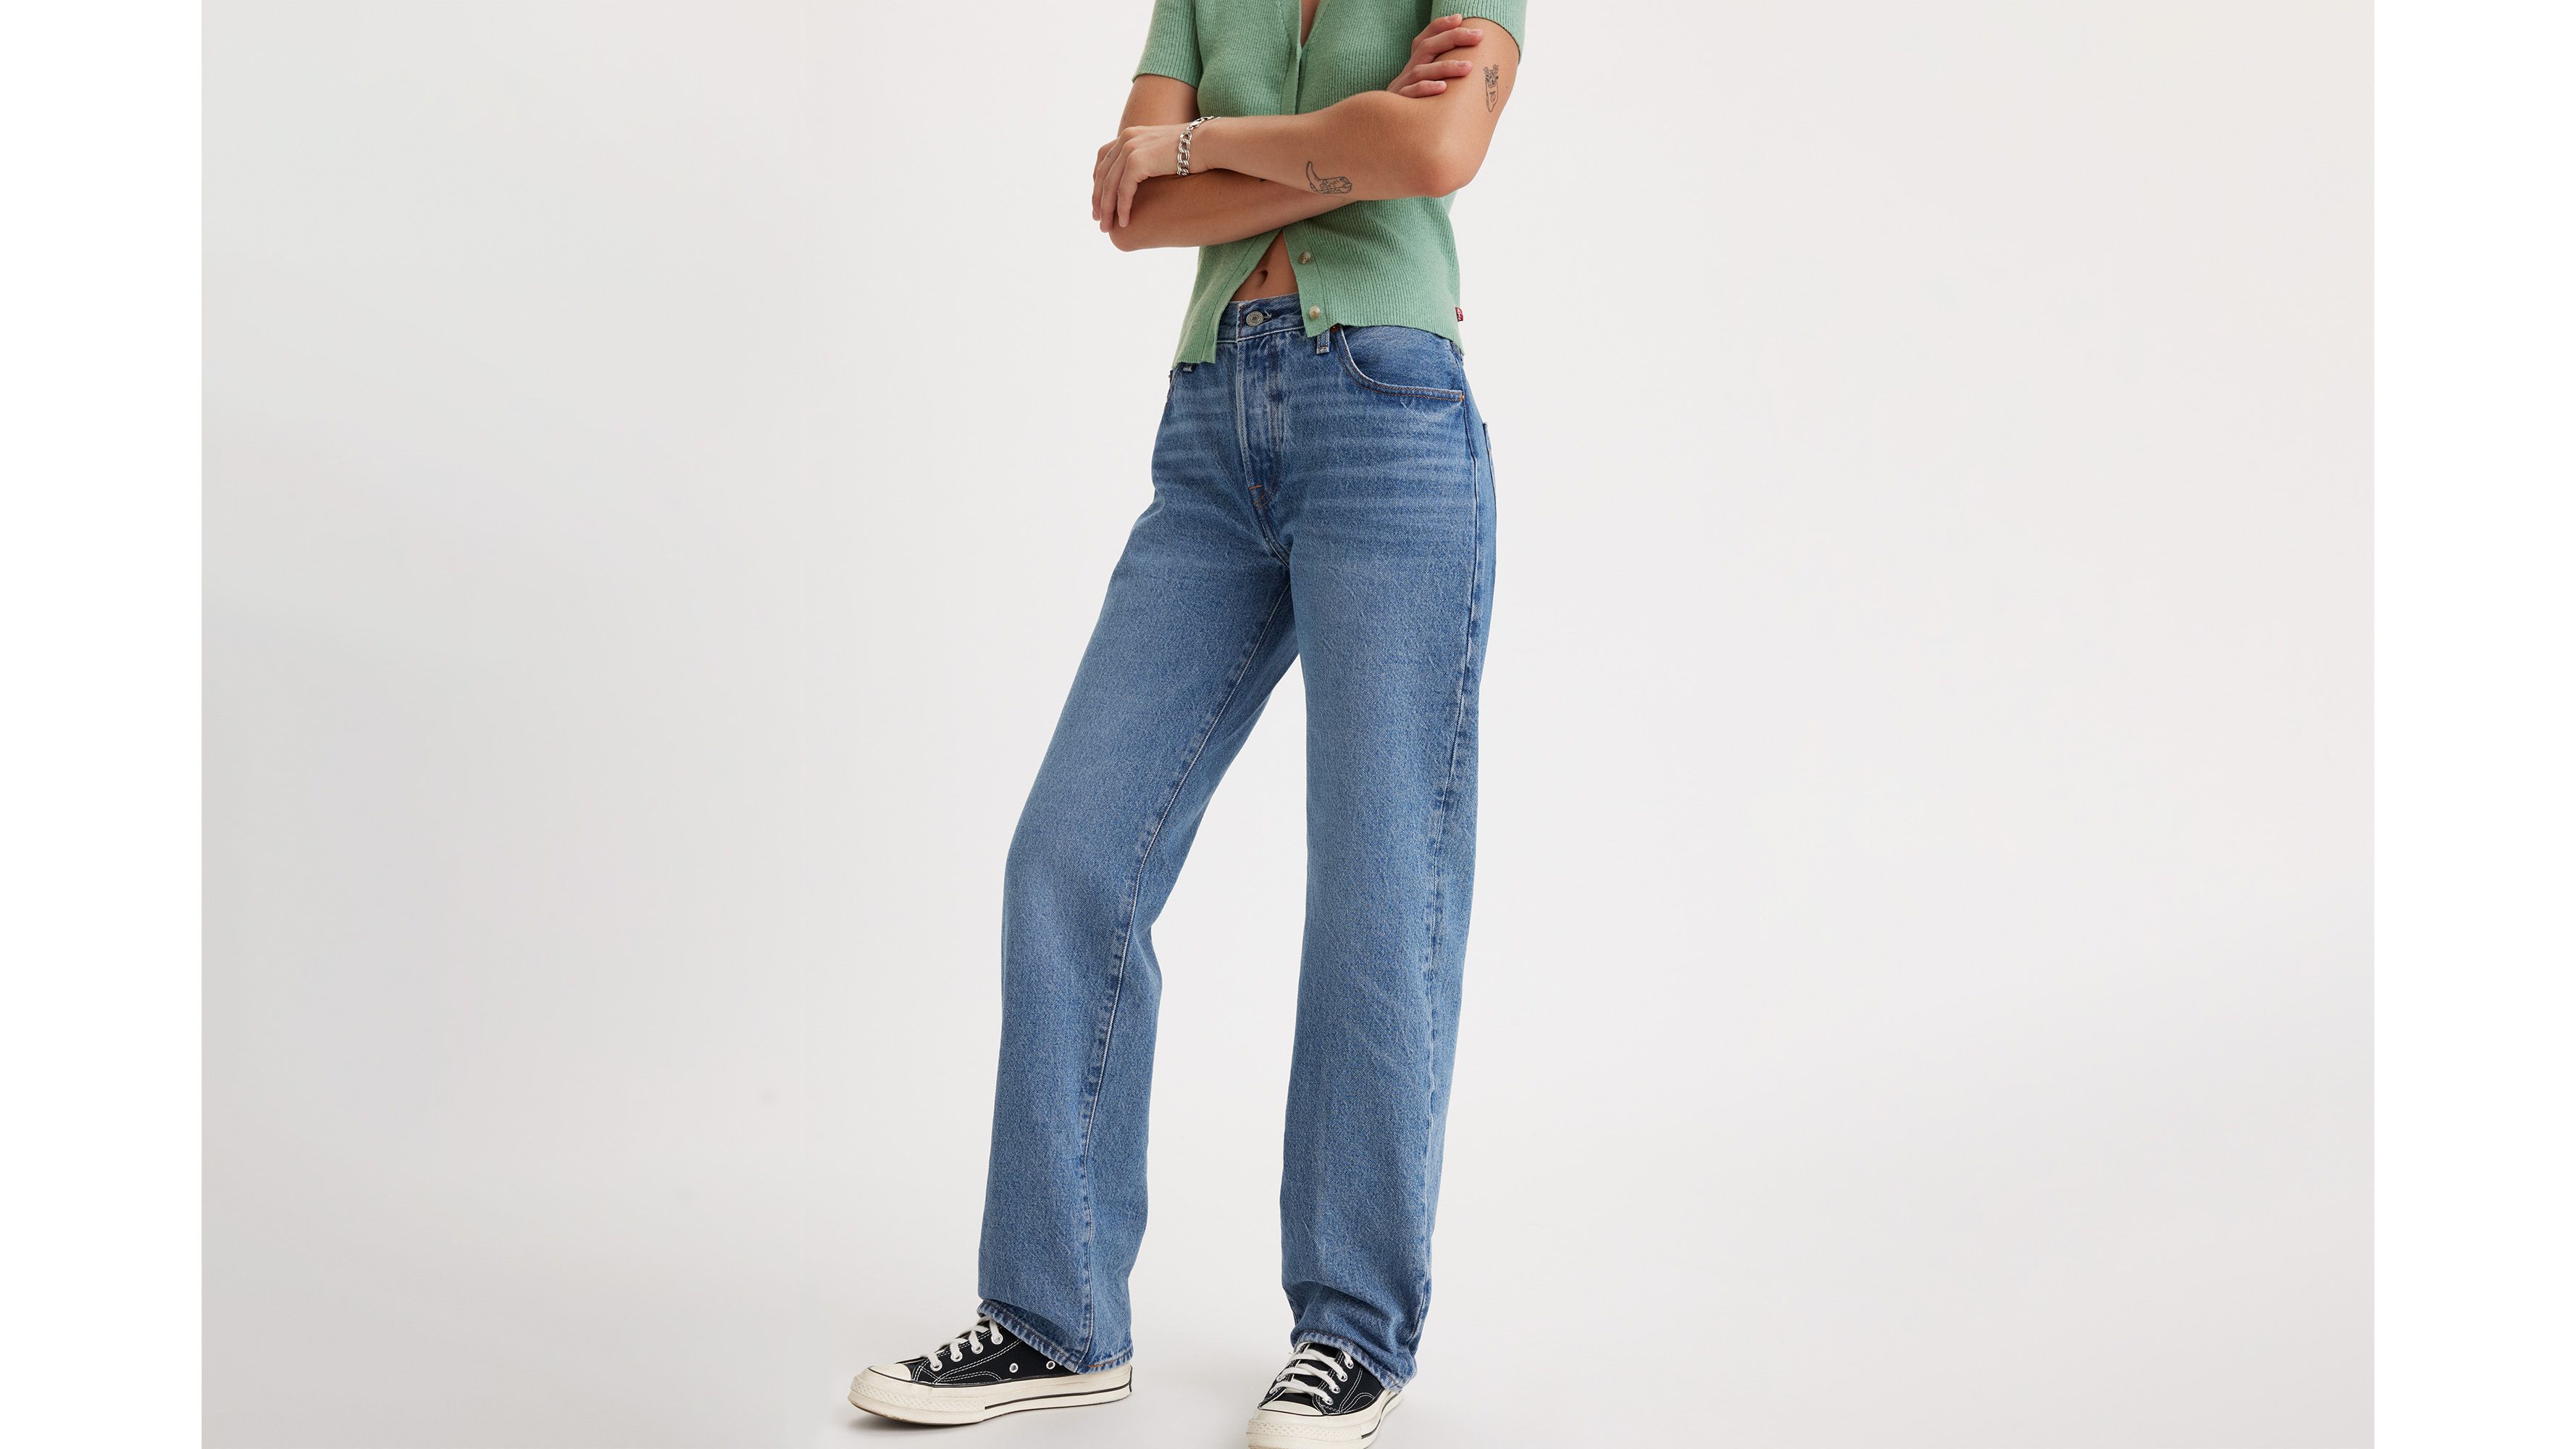 Francesca's Reese Criss Cross Waist 90s Skinny Jeans